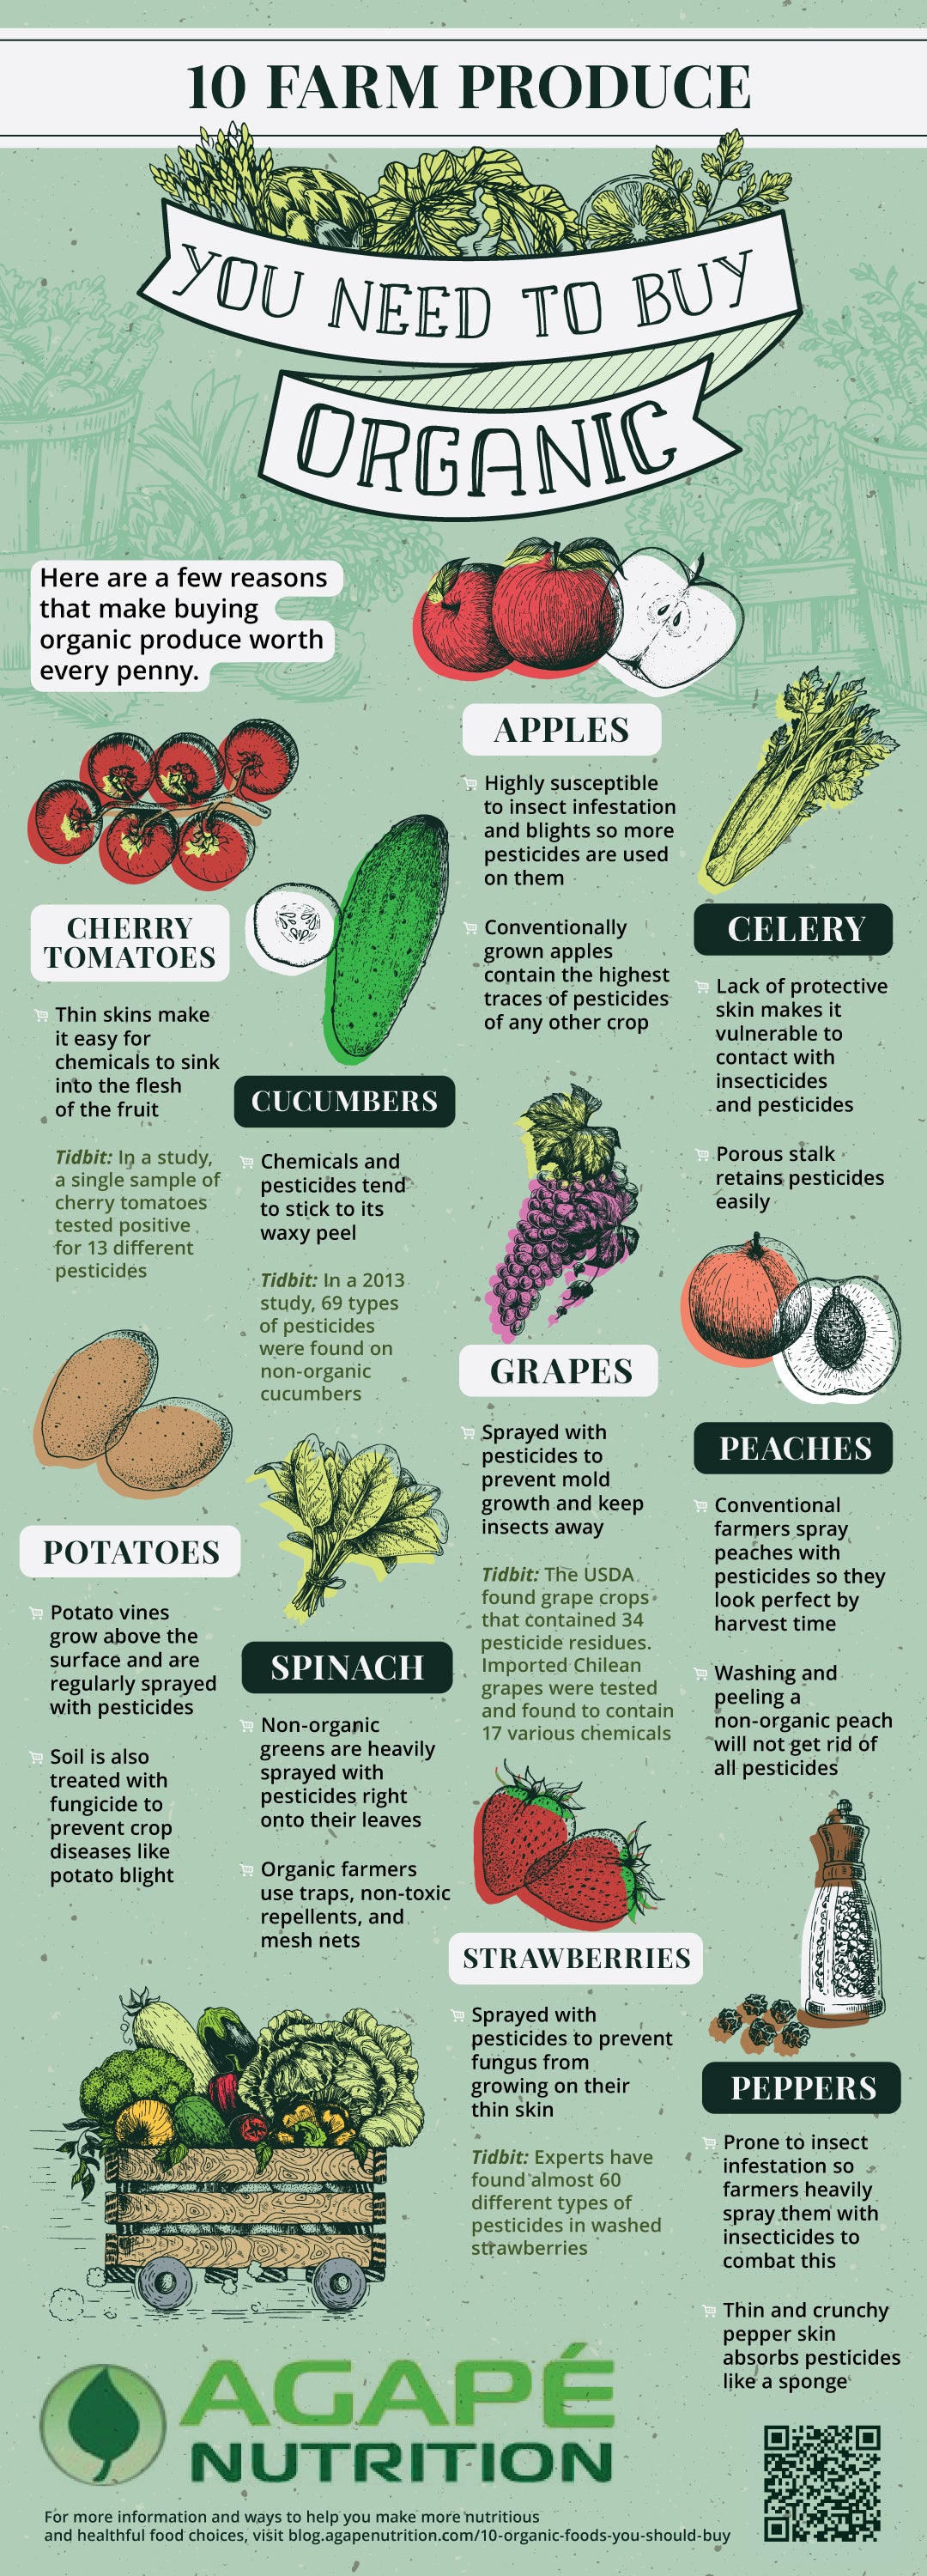 Agape Nutrition | Farm Produce You Need To Buy Organic | Organic Foods List